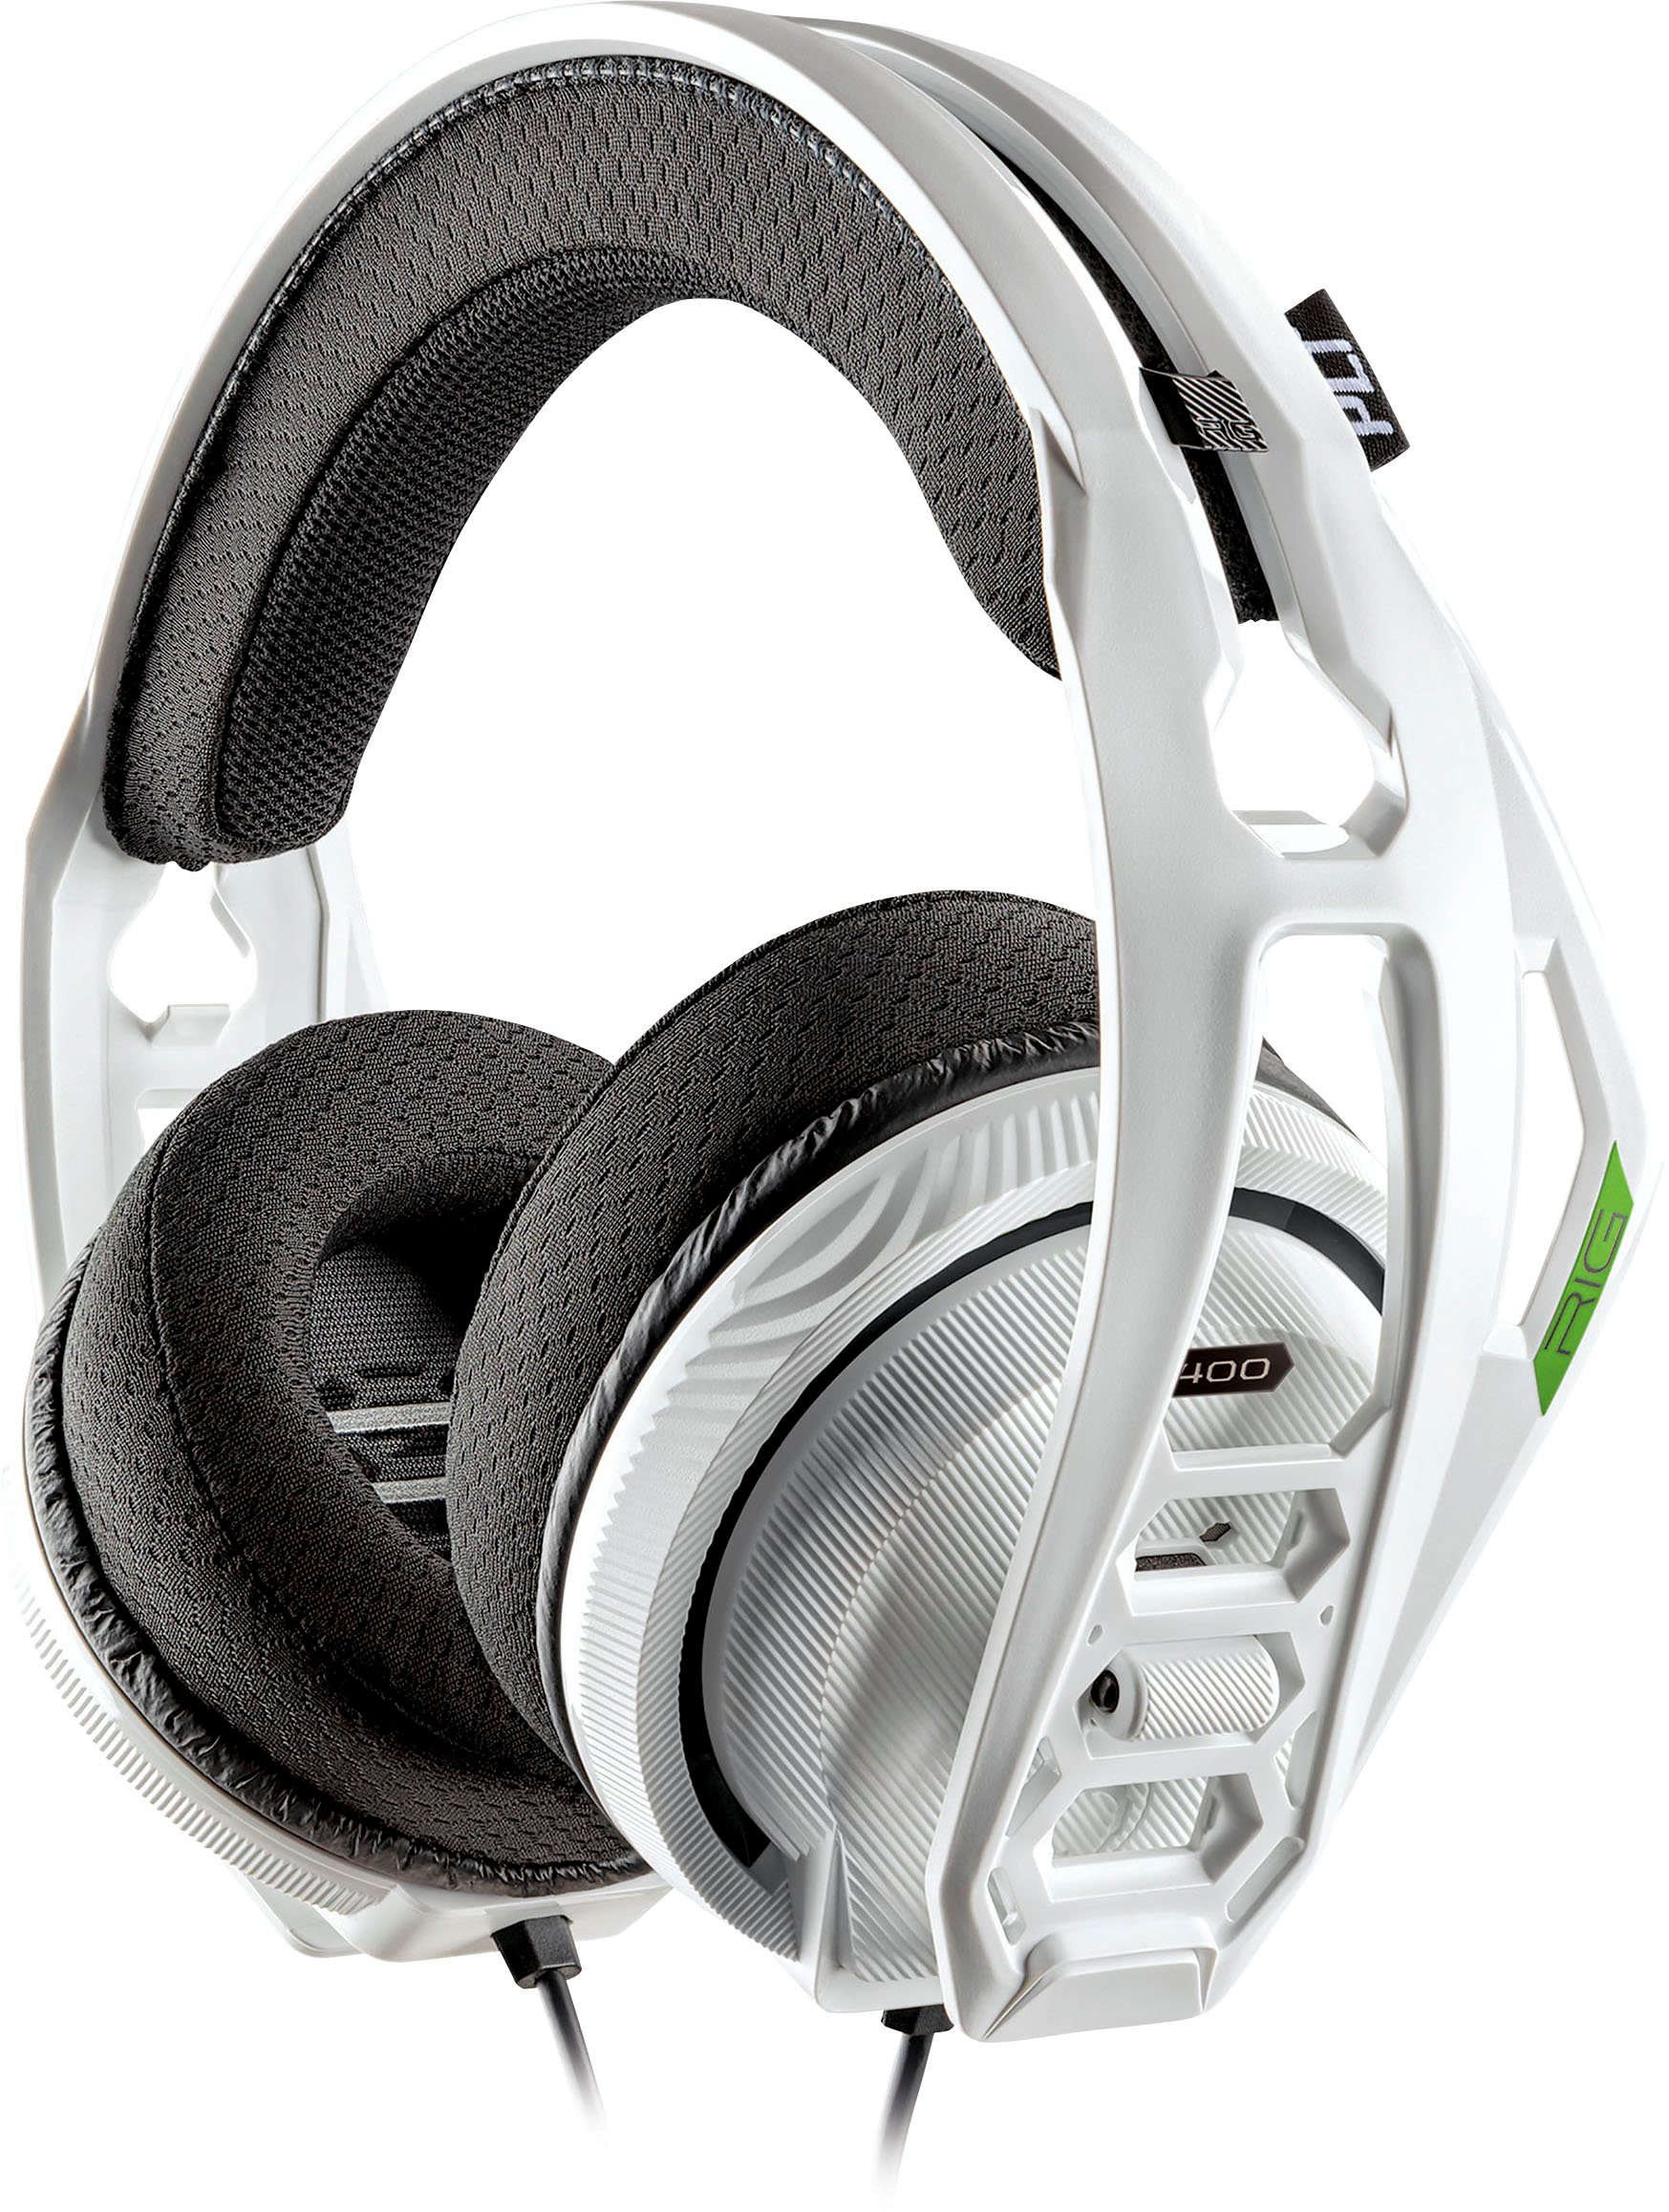 abnehmbar) (Geräuschisolierung, Mikrofon 400HX nacon Gaming-Headset RIG Gaming-Headset, kabelgebunden Nacon